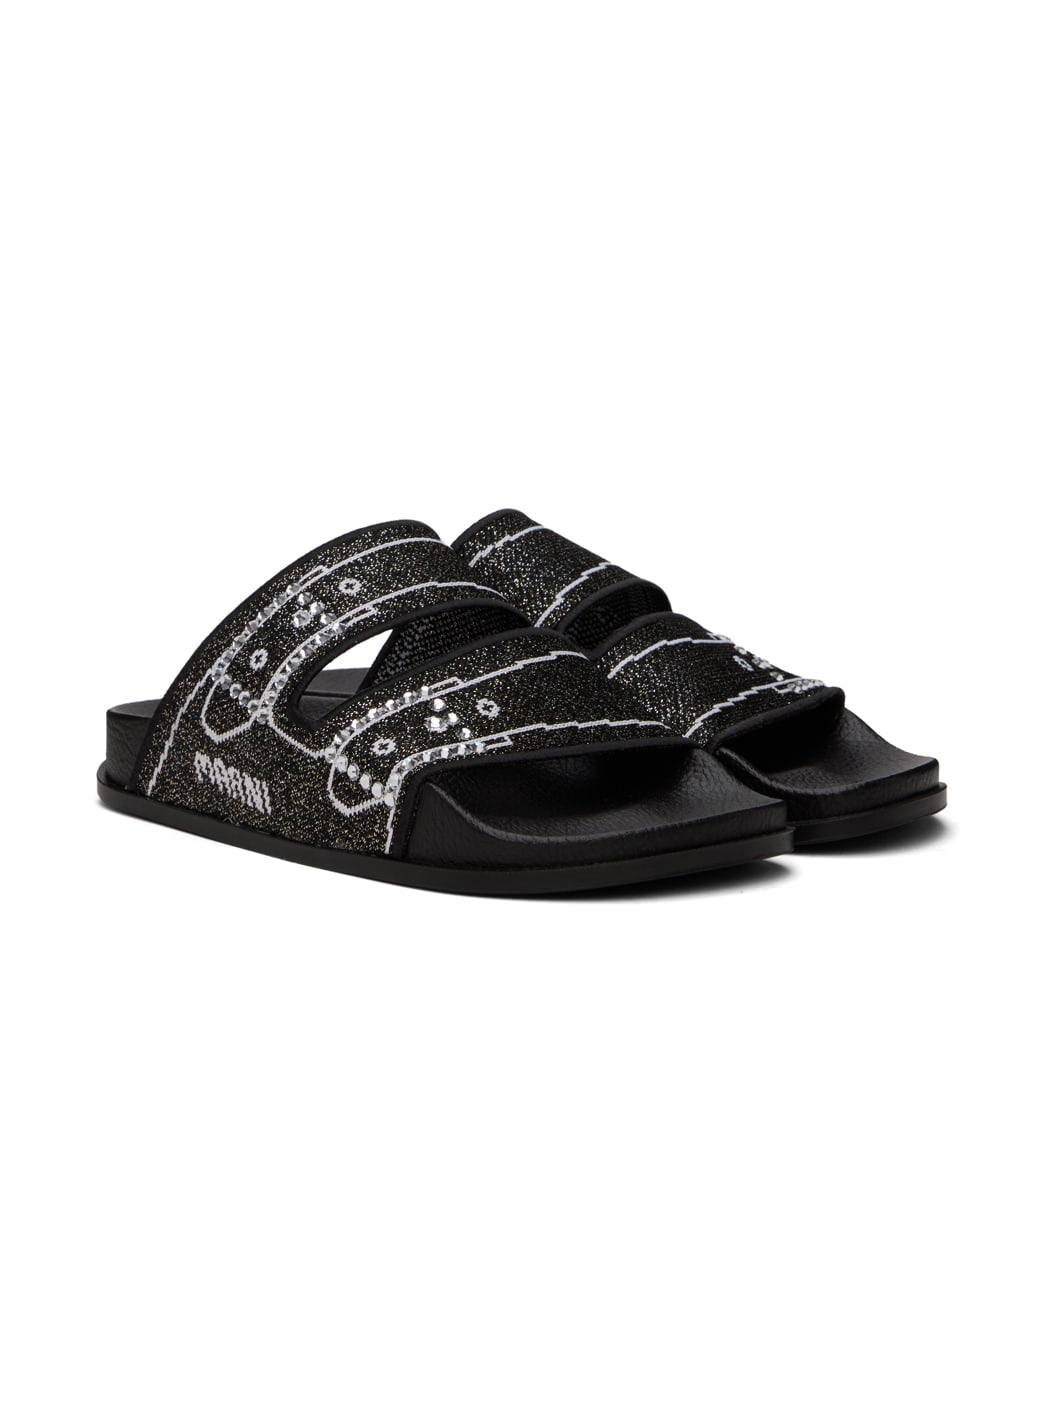 Black Jacquard Sandals - 4